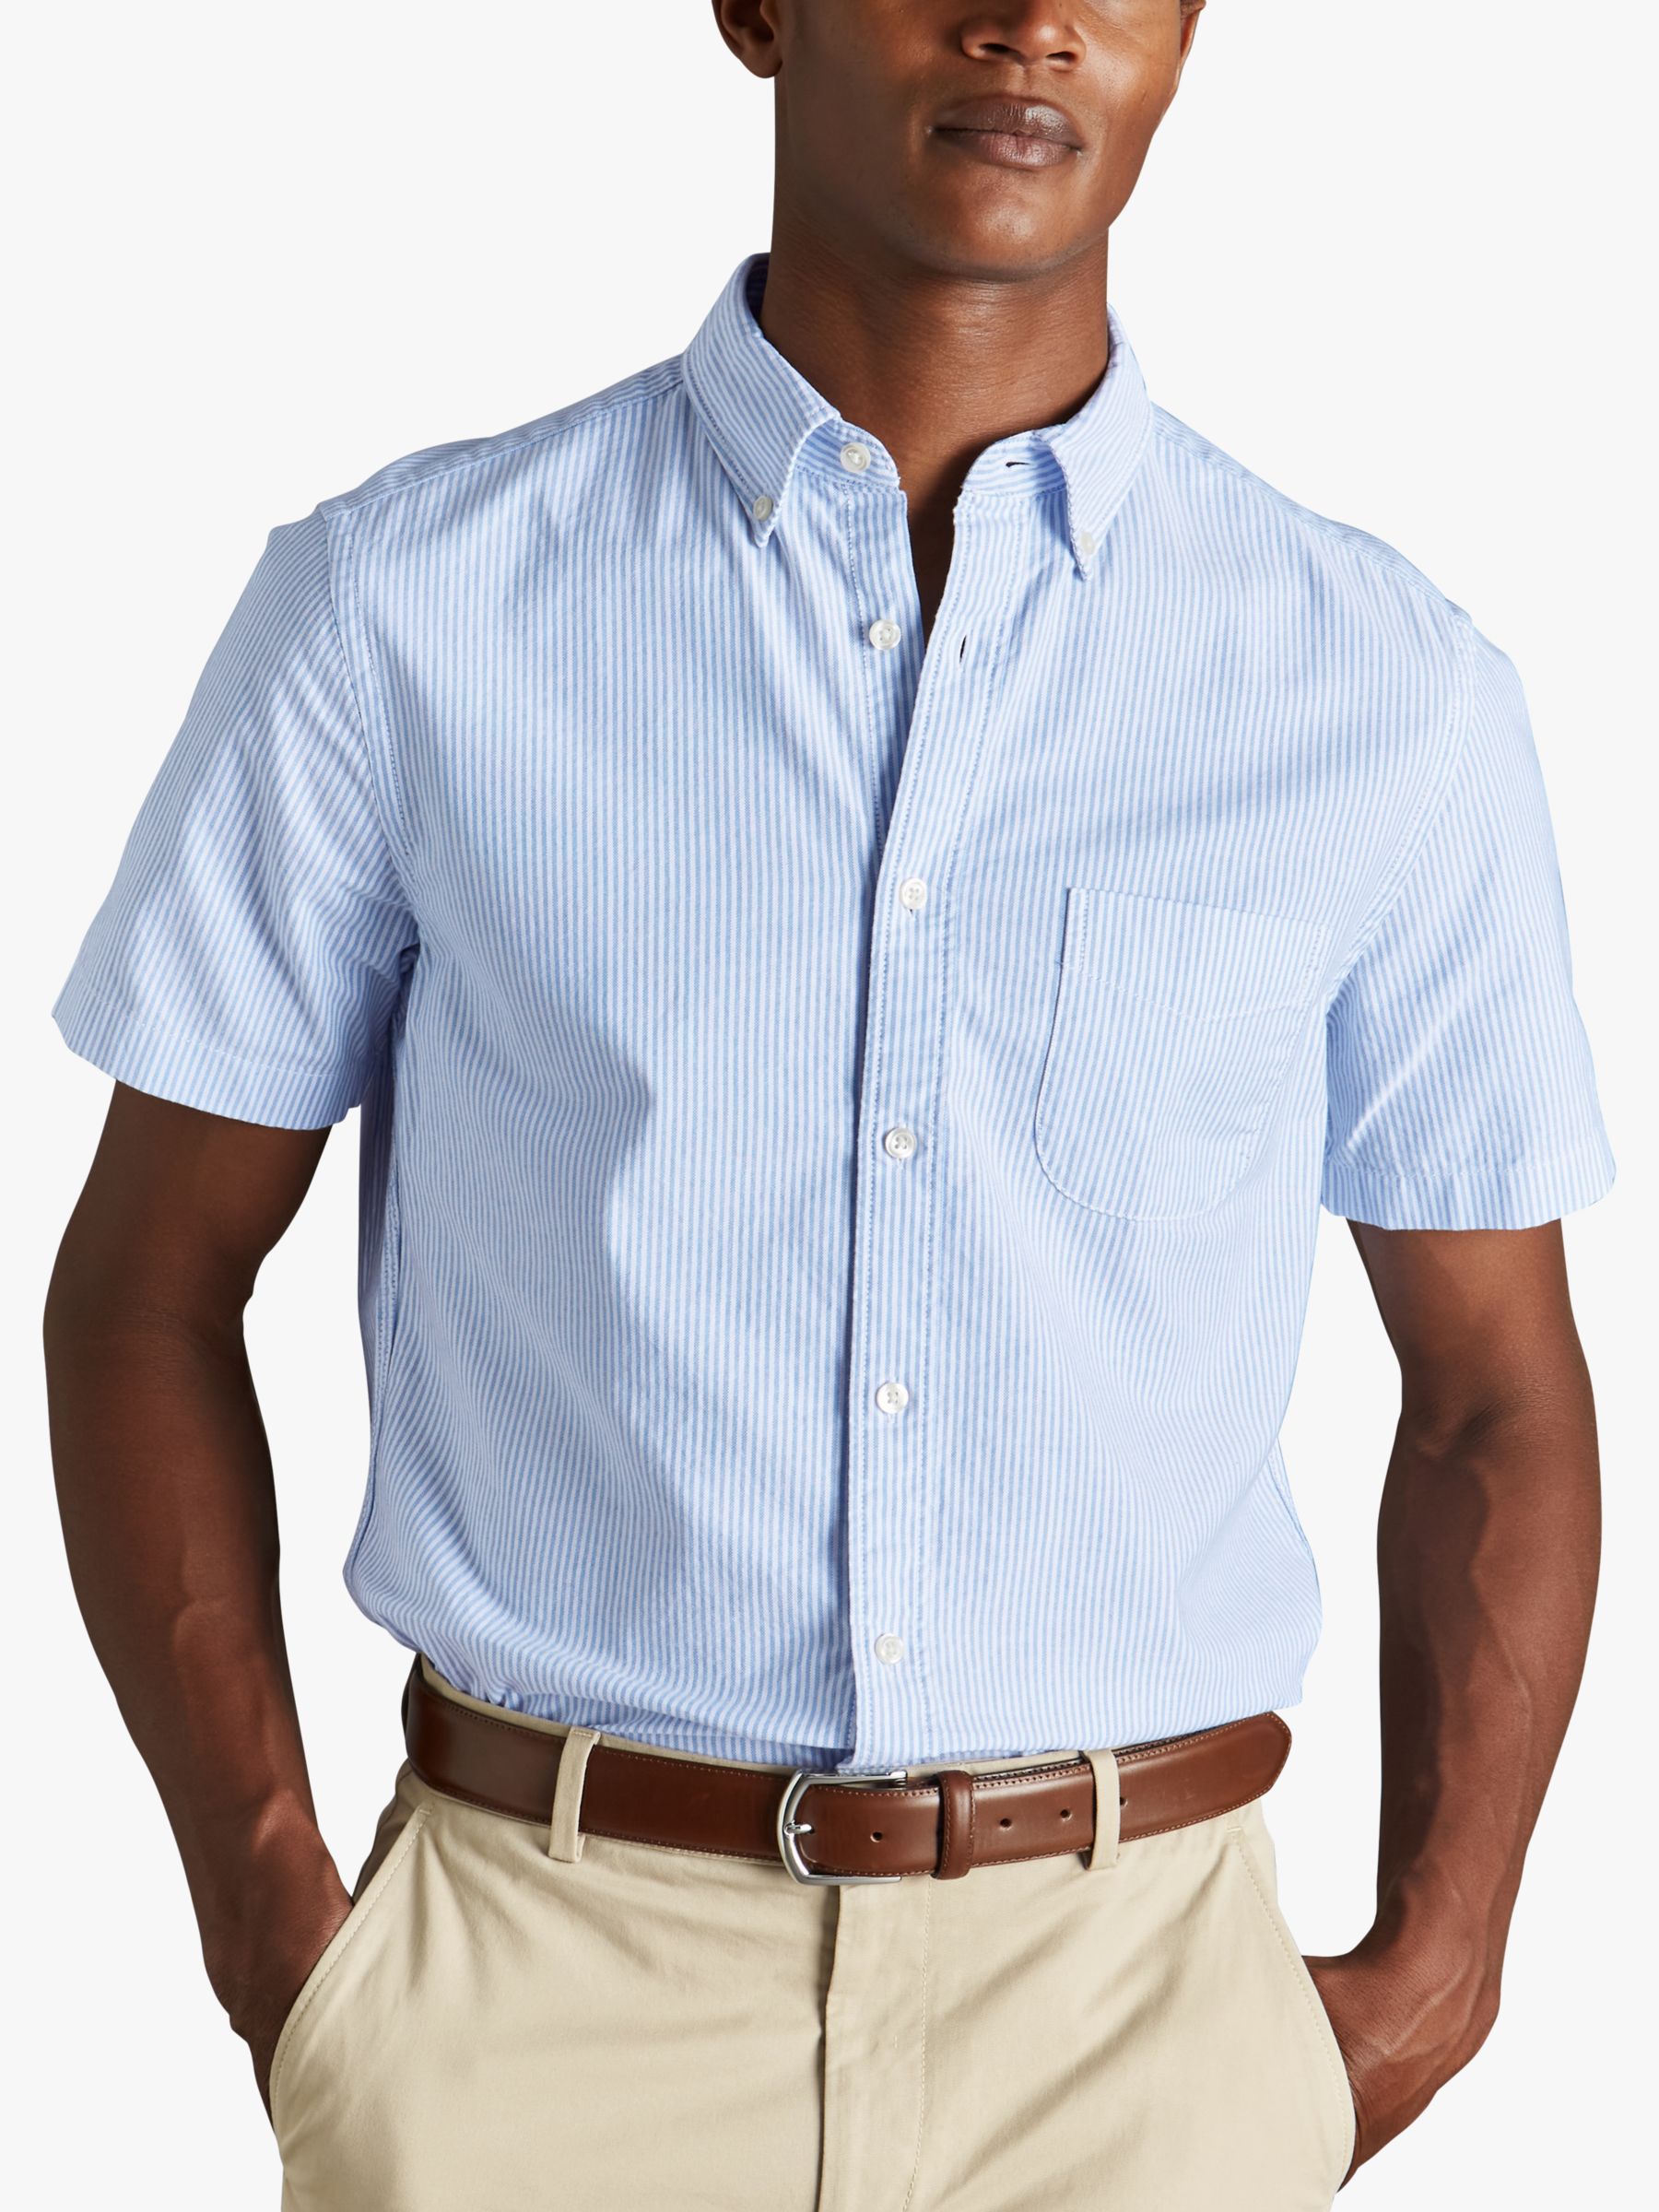 Charles Tyrwhitt Stripe Short Sleeve Washed Oxford Shirt, Ocean Blue, M